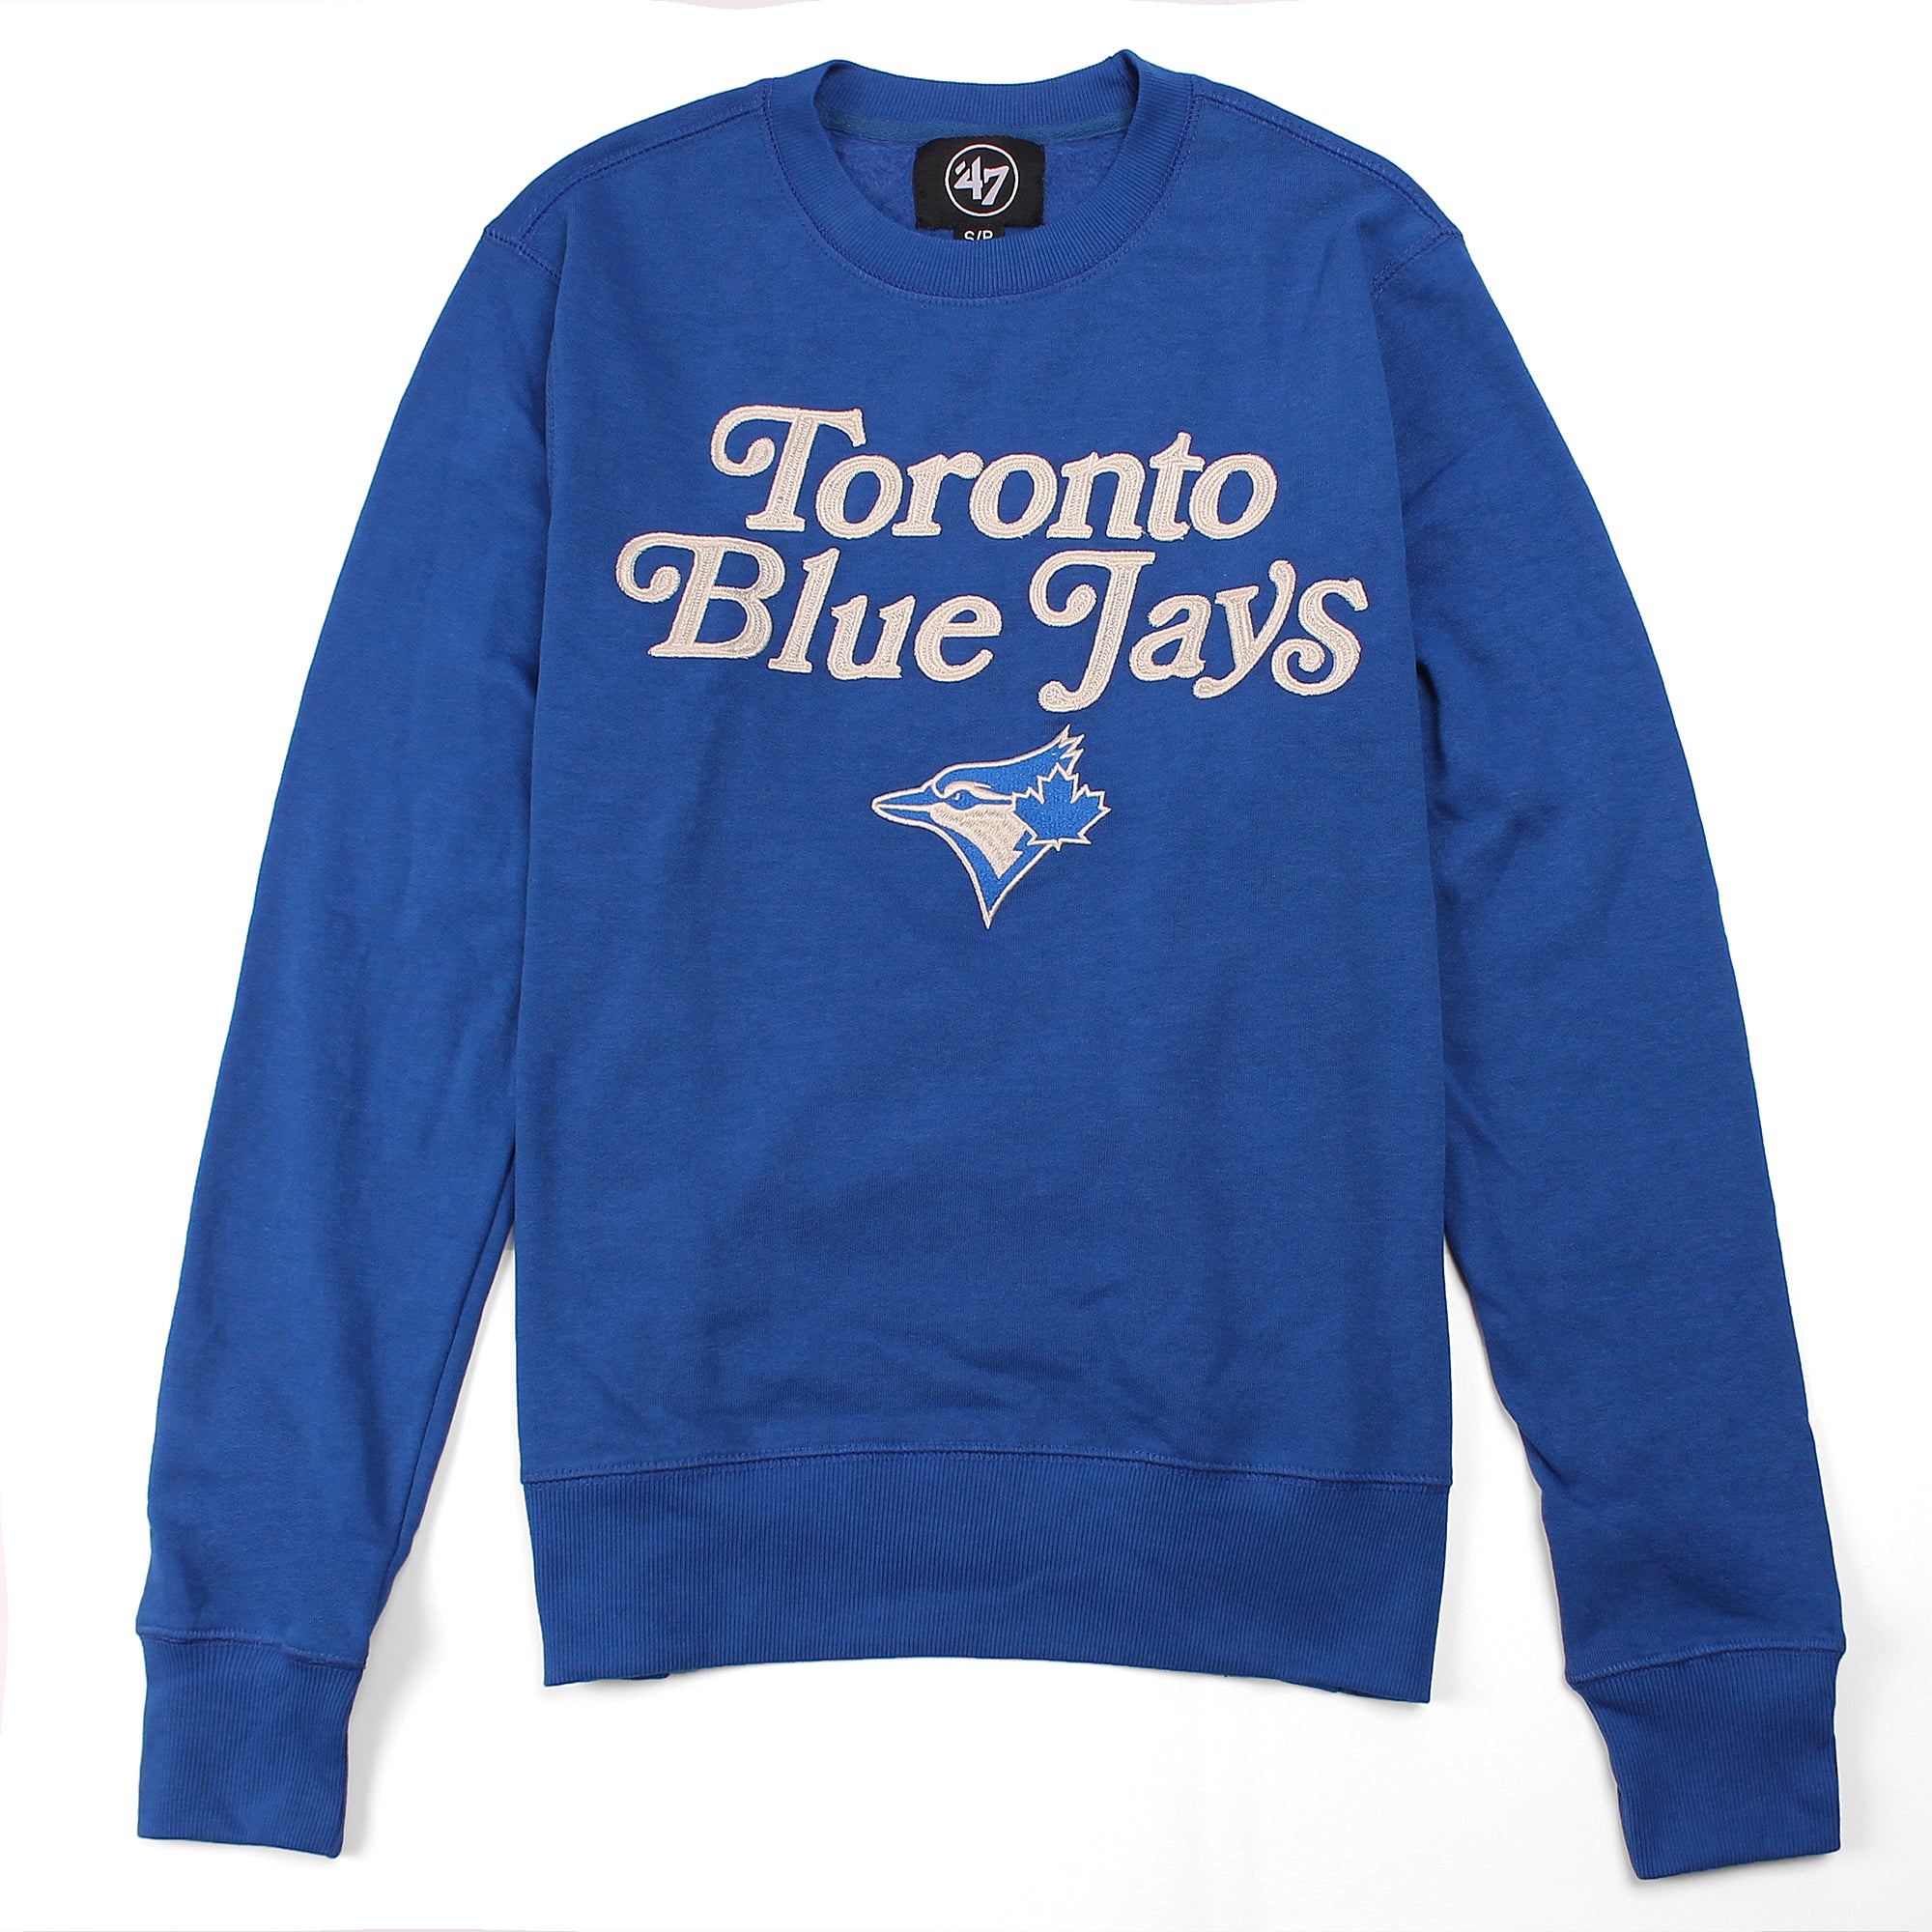 Toronto Blue Jays Swank '47 Fleece Crew